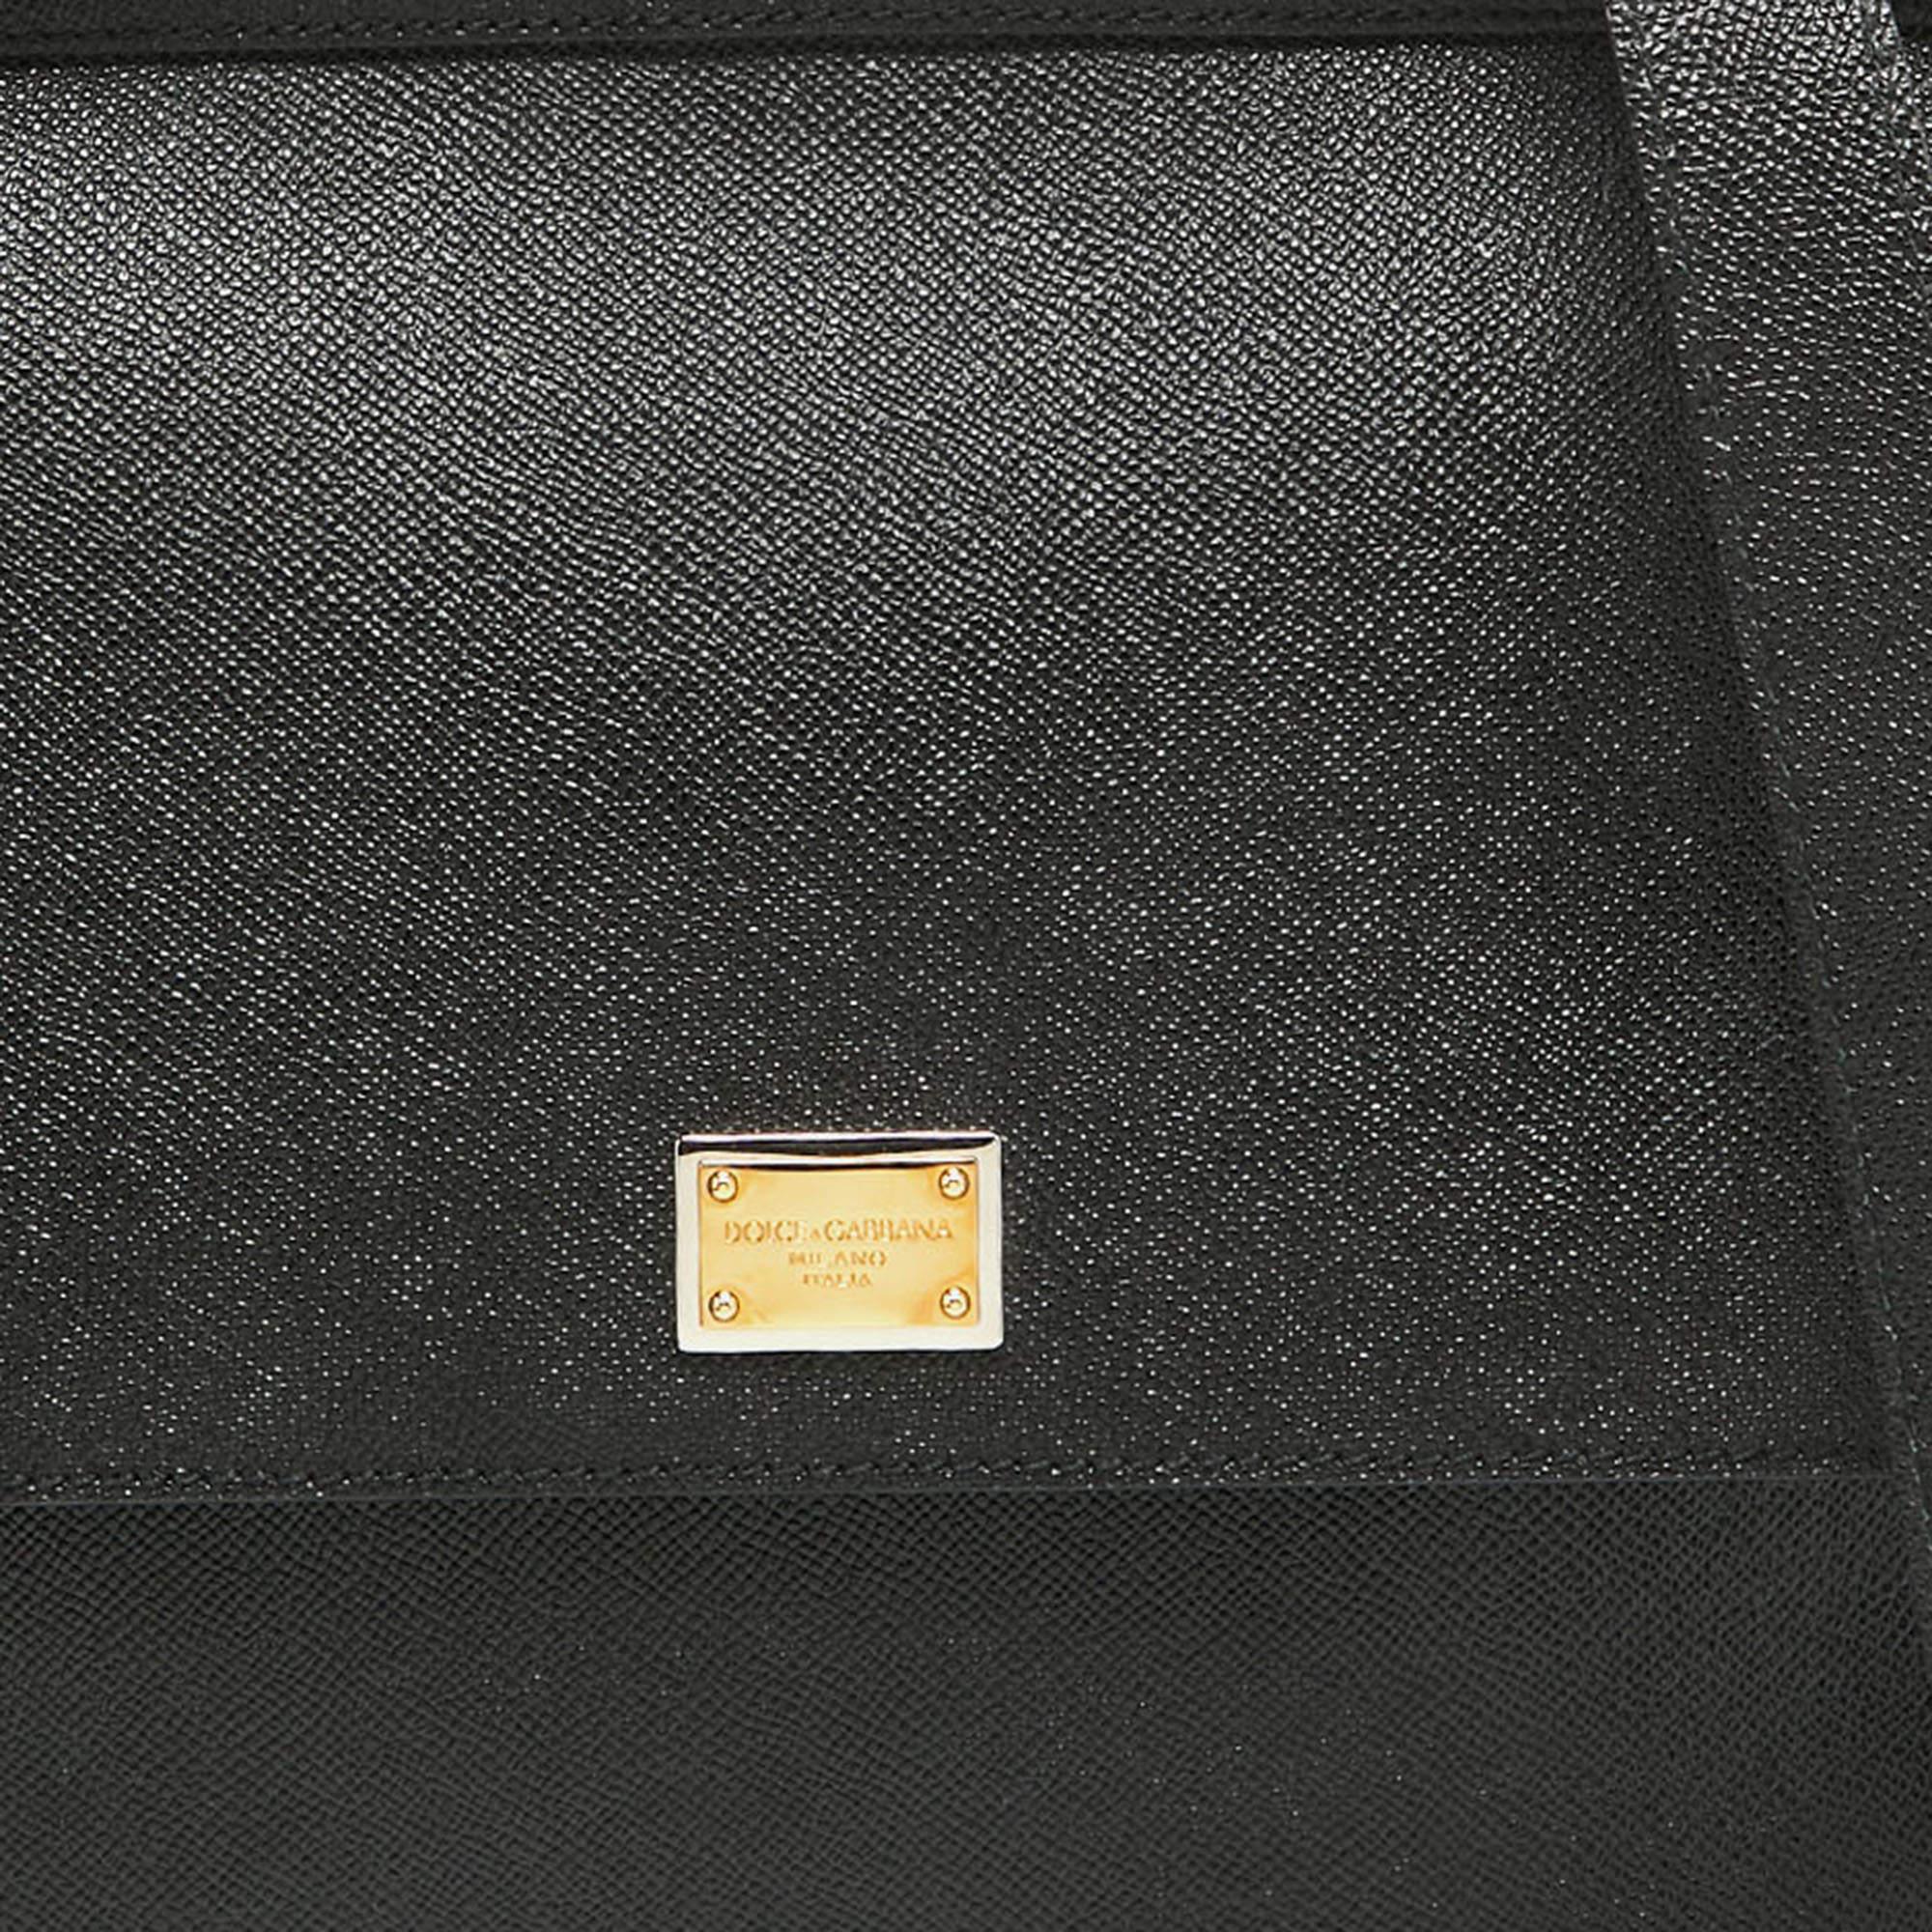 Dolce & Gabbana Black Leather Large Miss Sicily Top Handle Bag For Sale 6